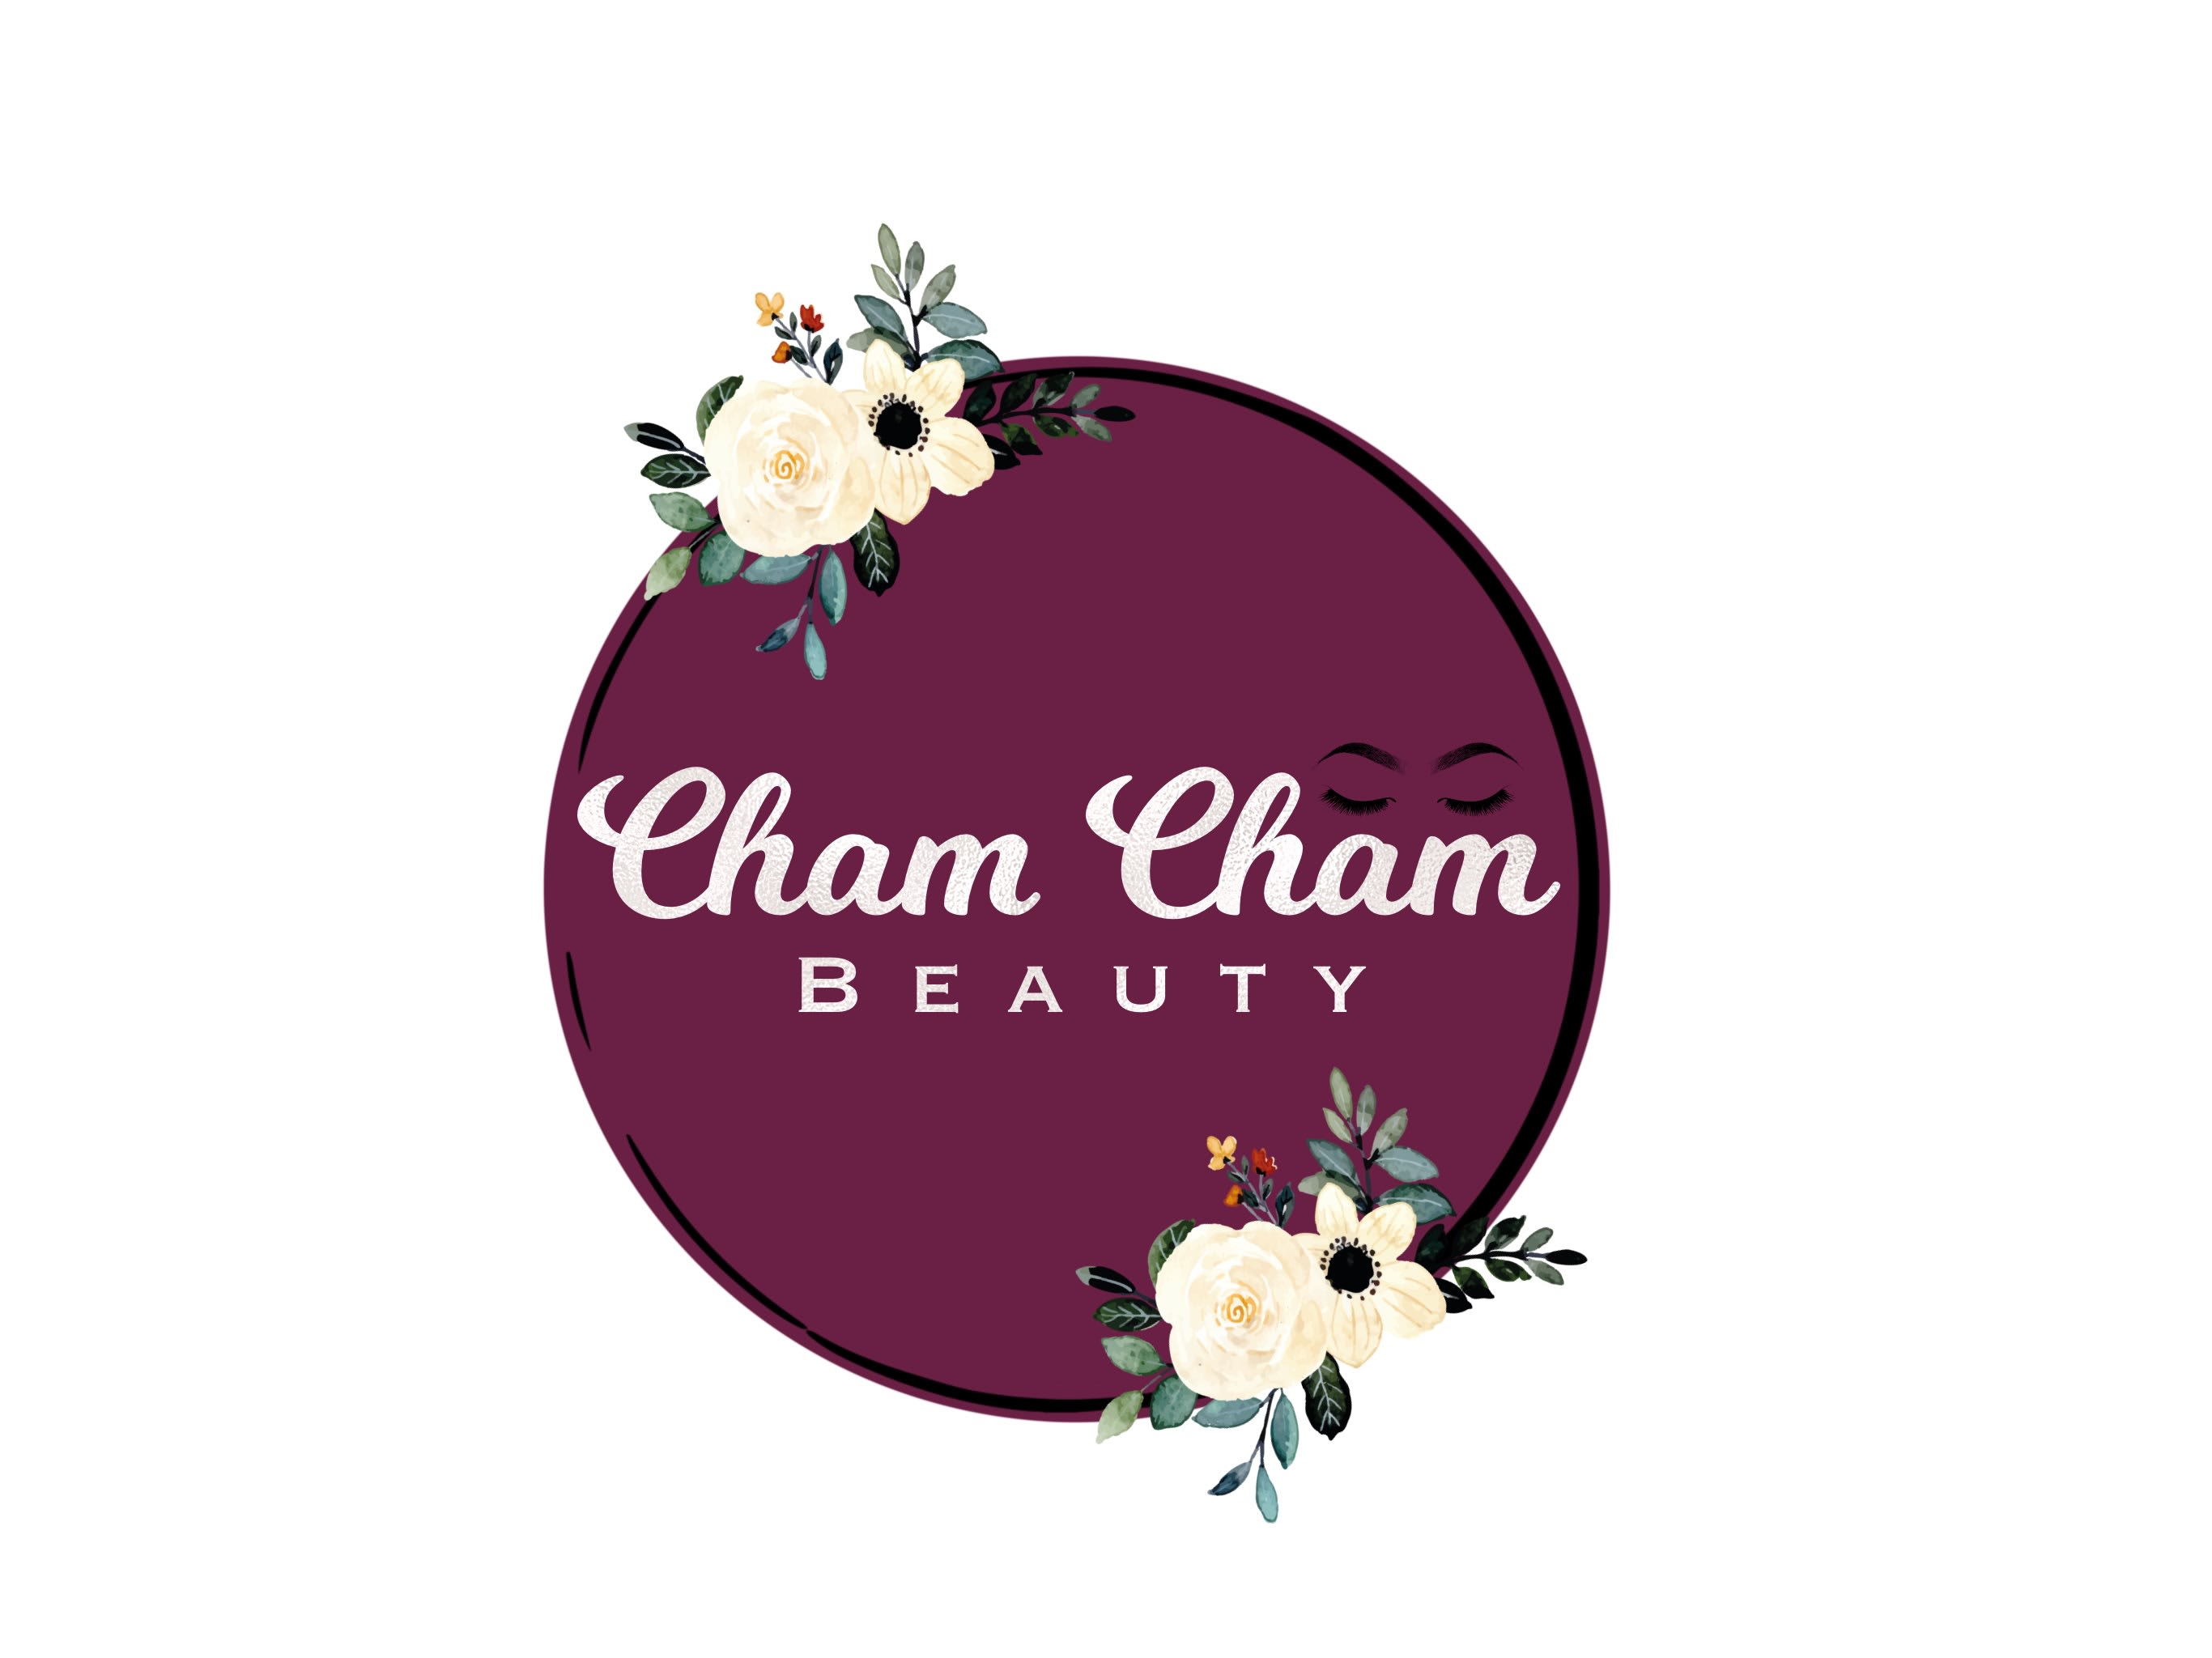 Cham Cham Beauty